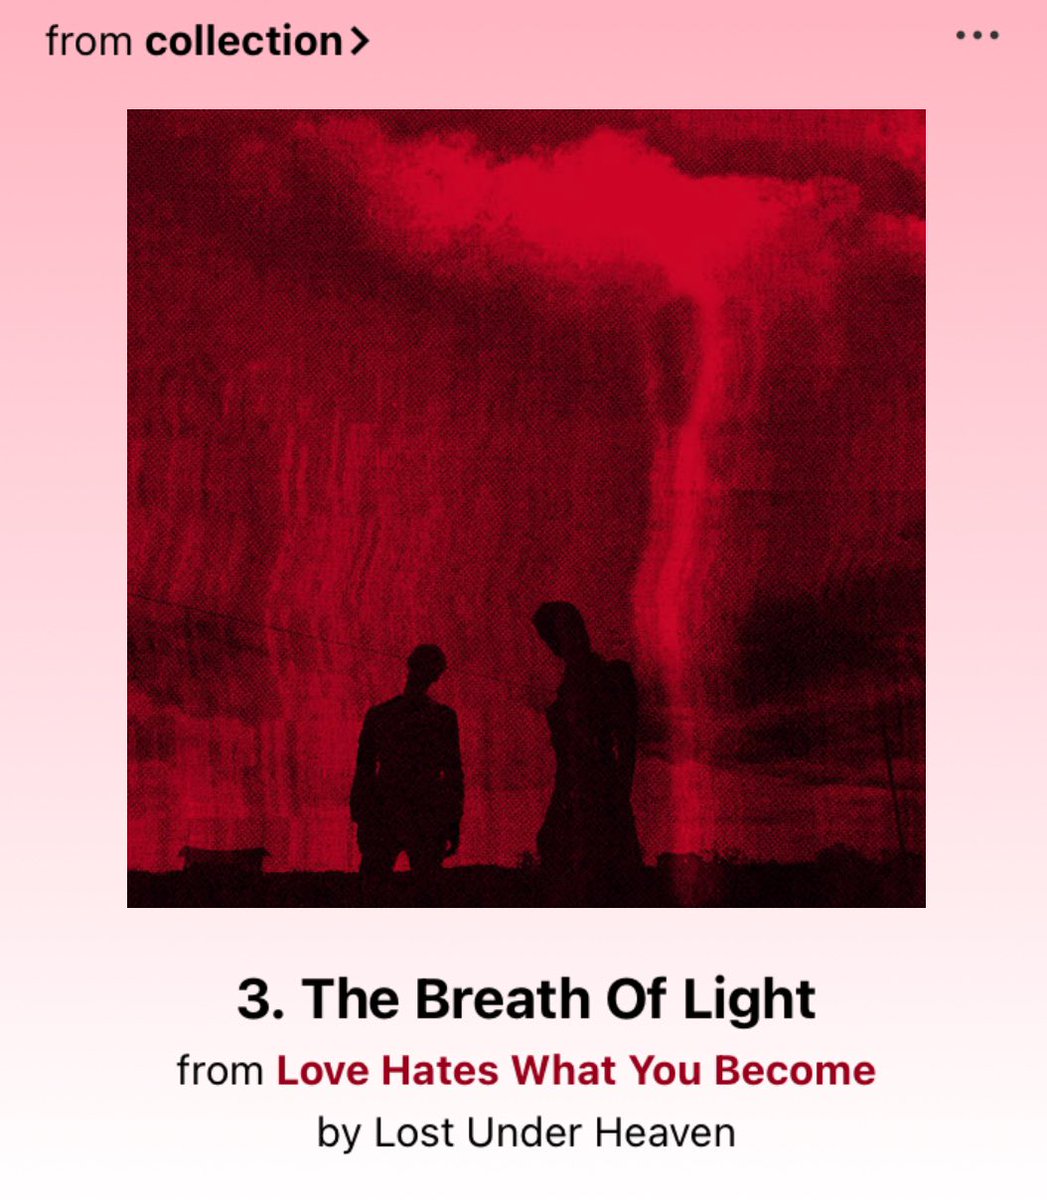 #LightTop20 The Breath of Light by @Lostunderheaven Goosebumps guaranted 🖤 lostunderheaven.bandcamp.com/track/the-brea…